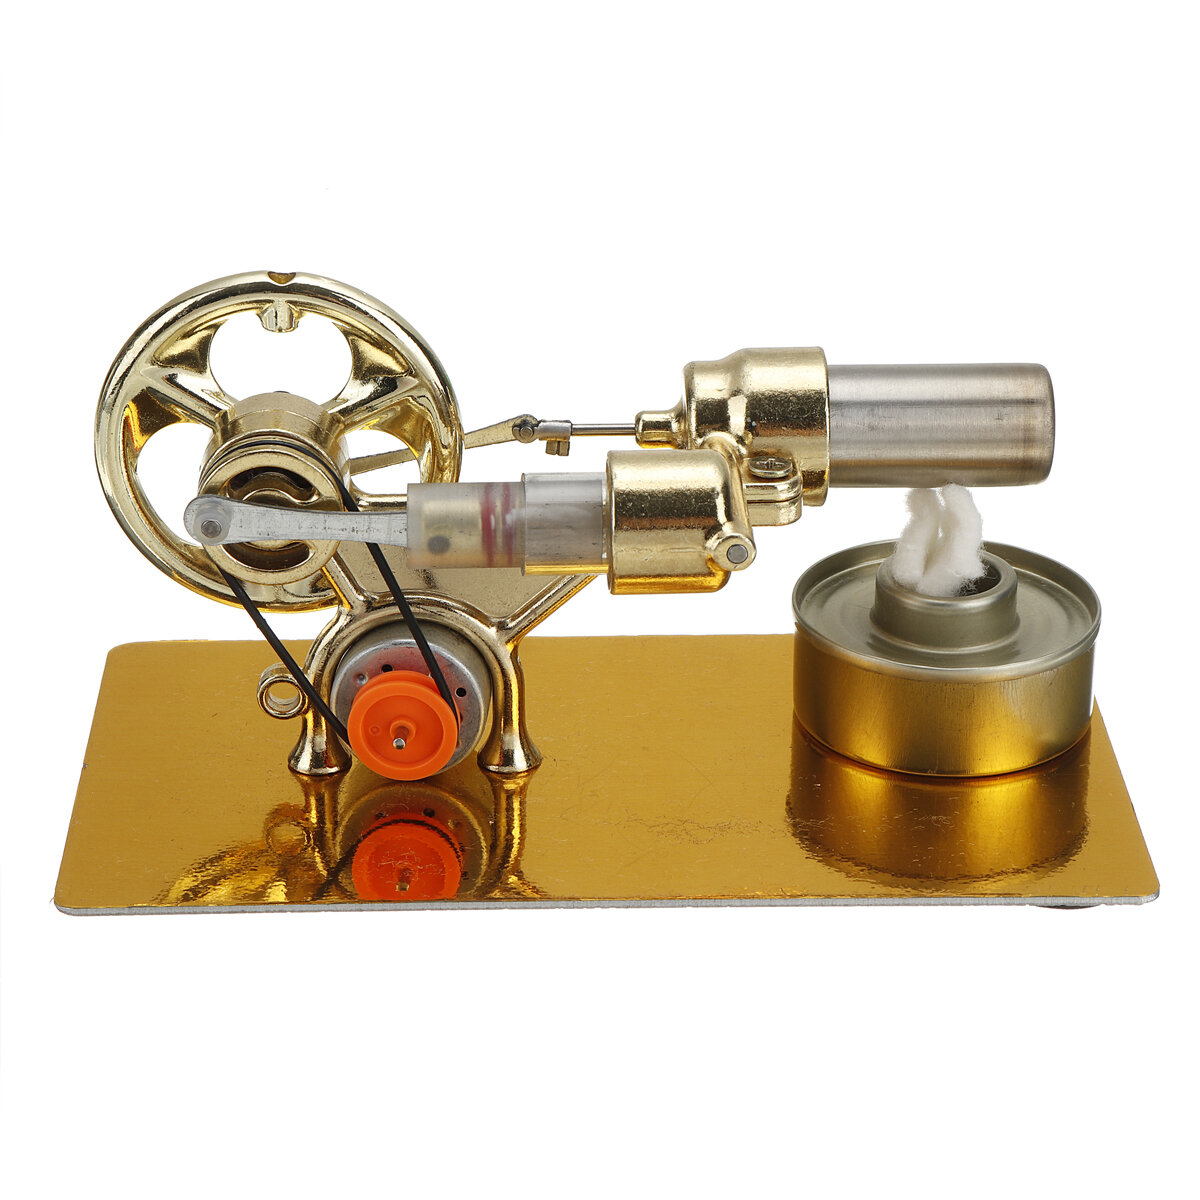 1PC 16 x 8.5 x 11 cm Physical Science DIY Kits Stirling Engine Model met onderdelen